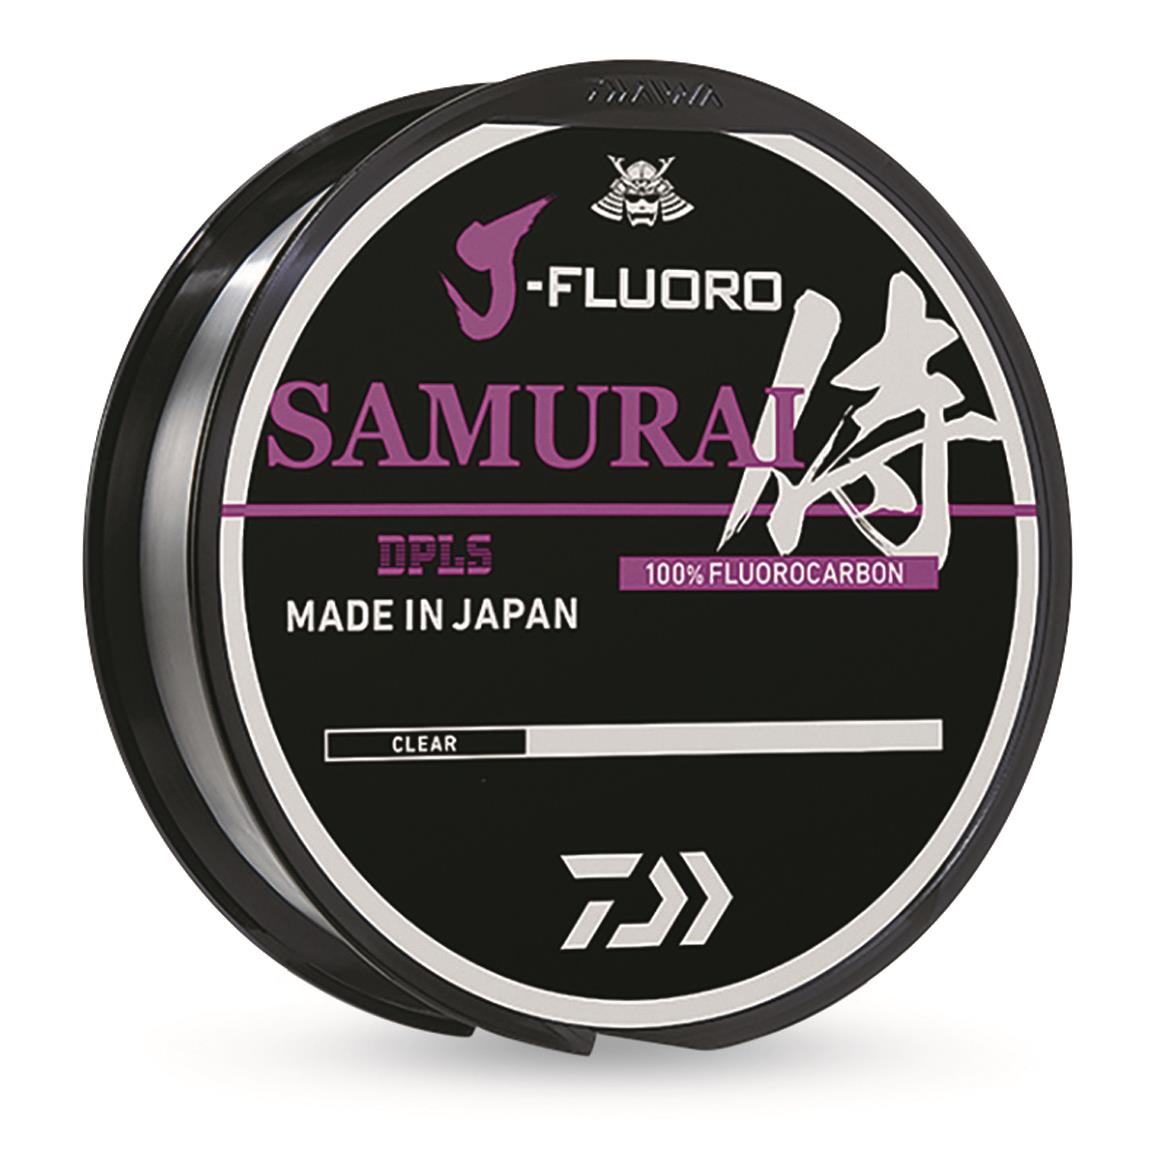 Daiwa J-Fluoro Samurai Fluorocarbon Fishing Line, 220 Yards